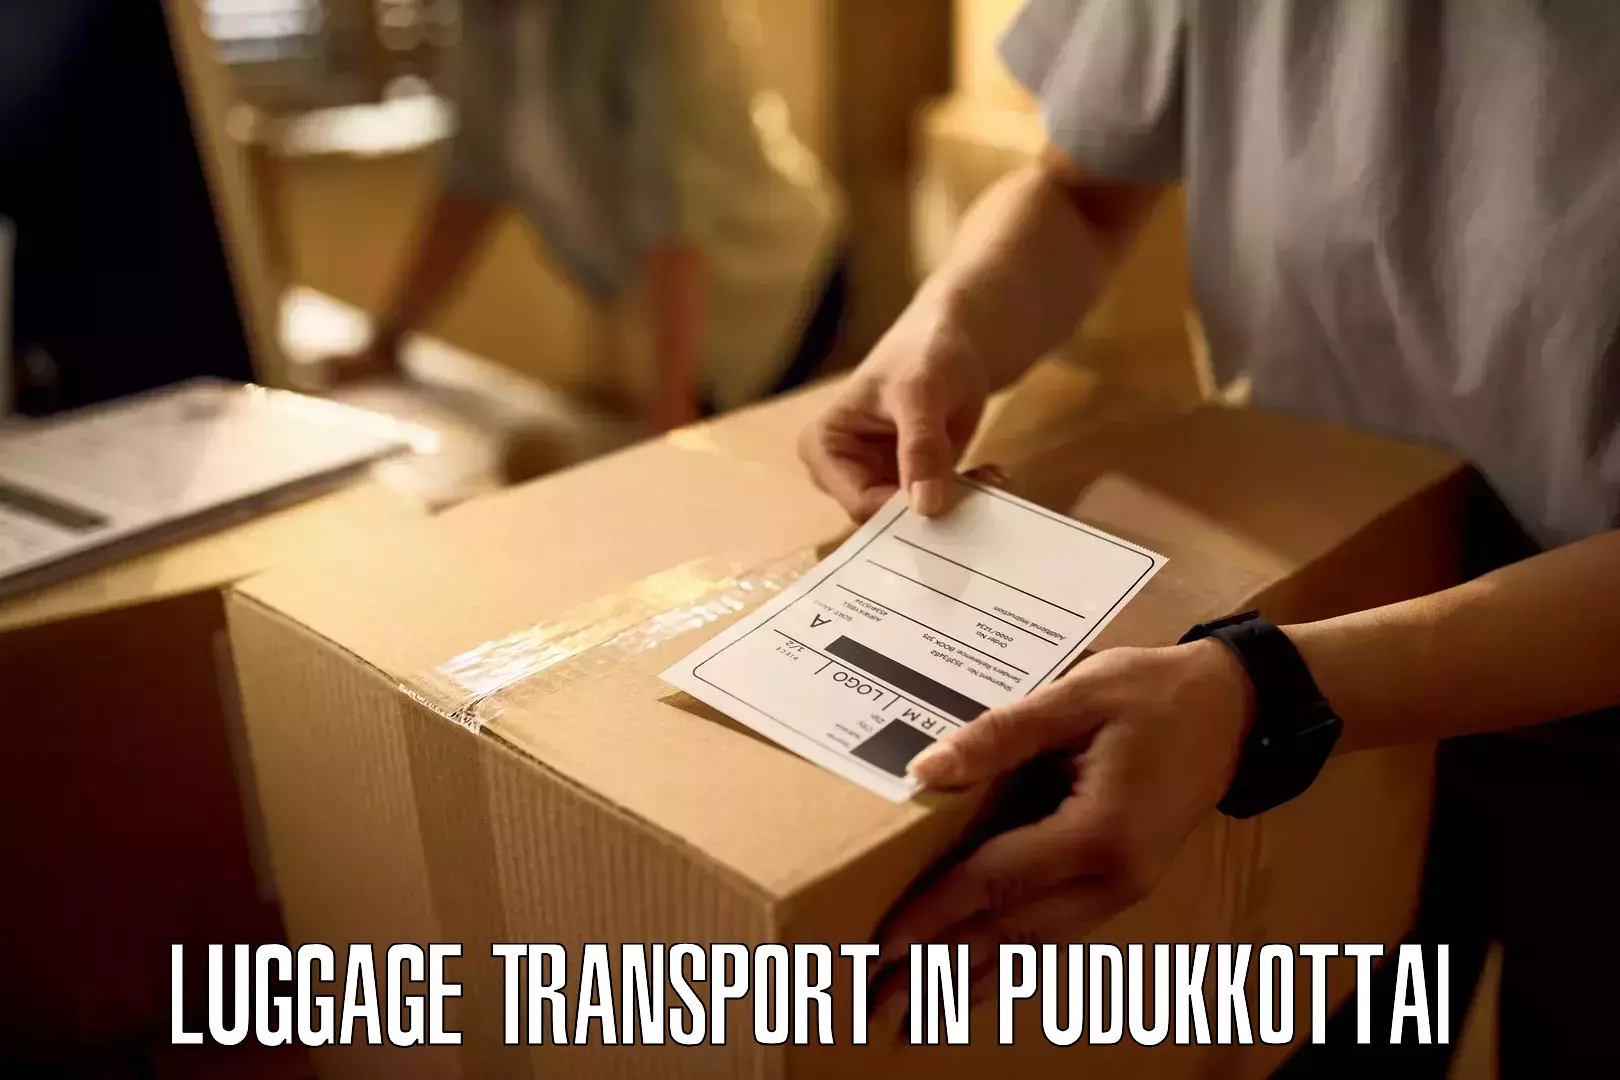 Hassle-free luggage shipping in Pudukkottai